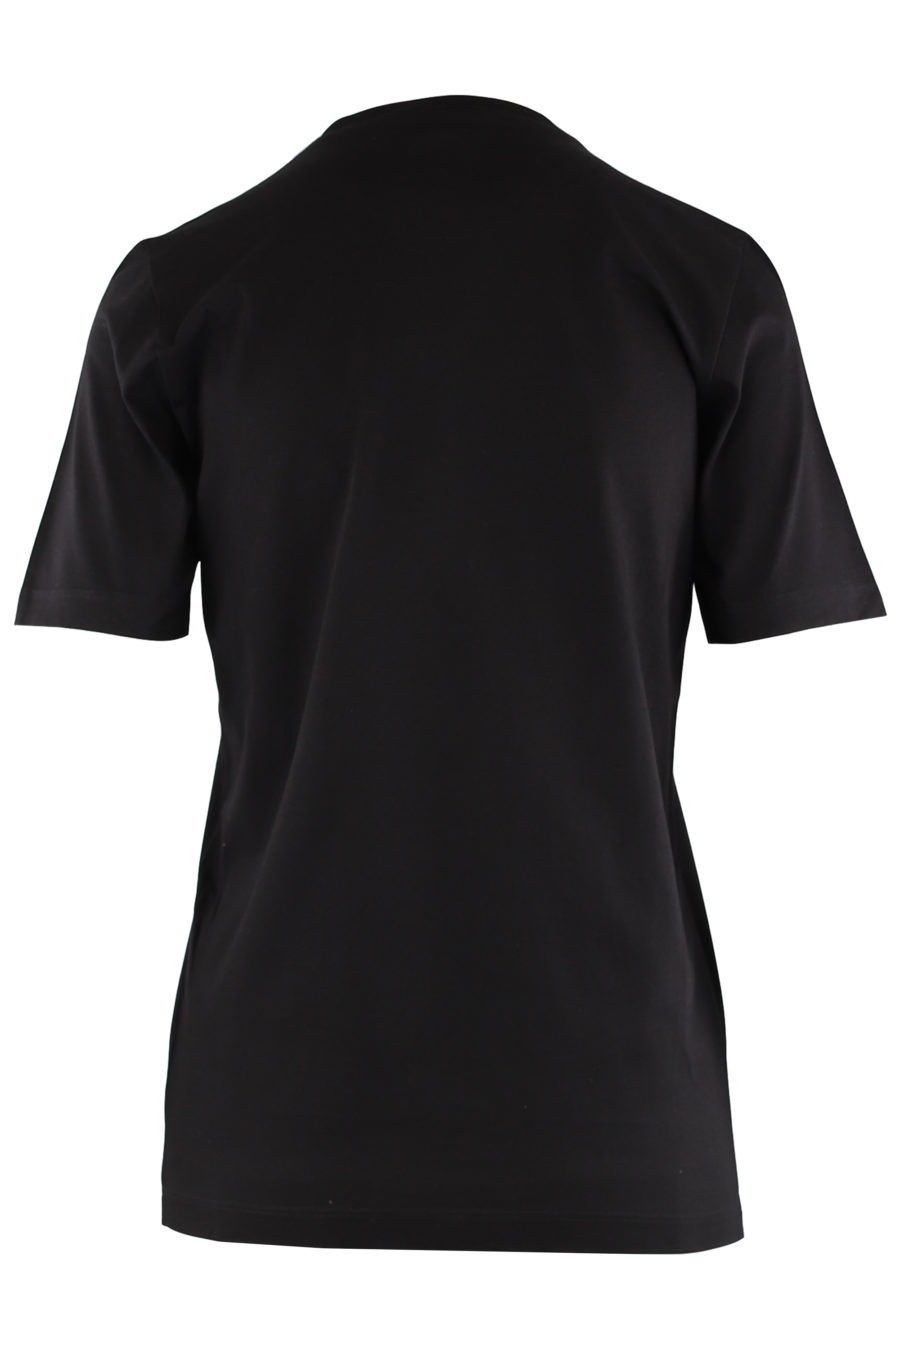 T-shirt noir avec logo "Icon" blanc - 7043bc1b1dd0ecefbc0909d7519165b0203d5266